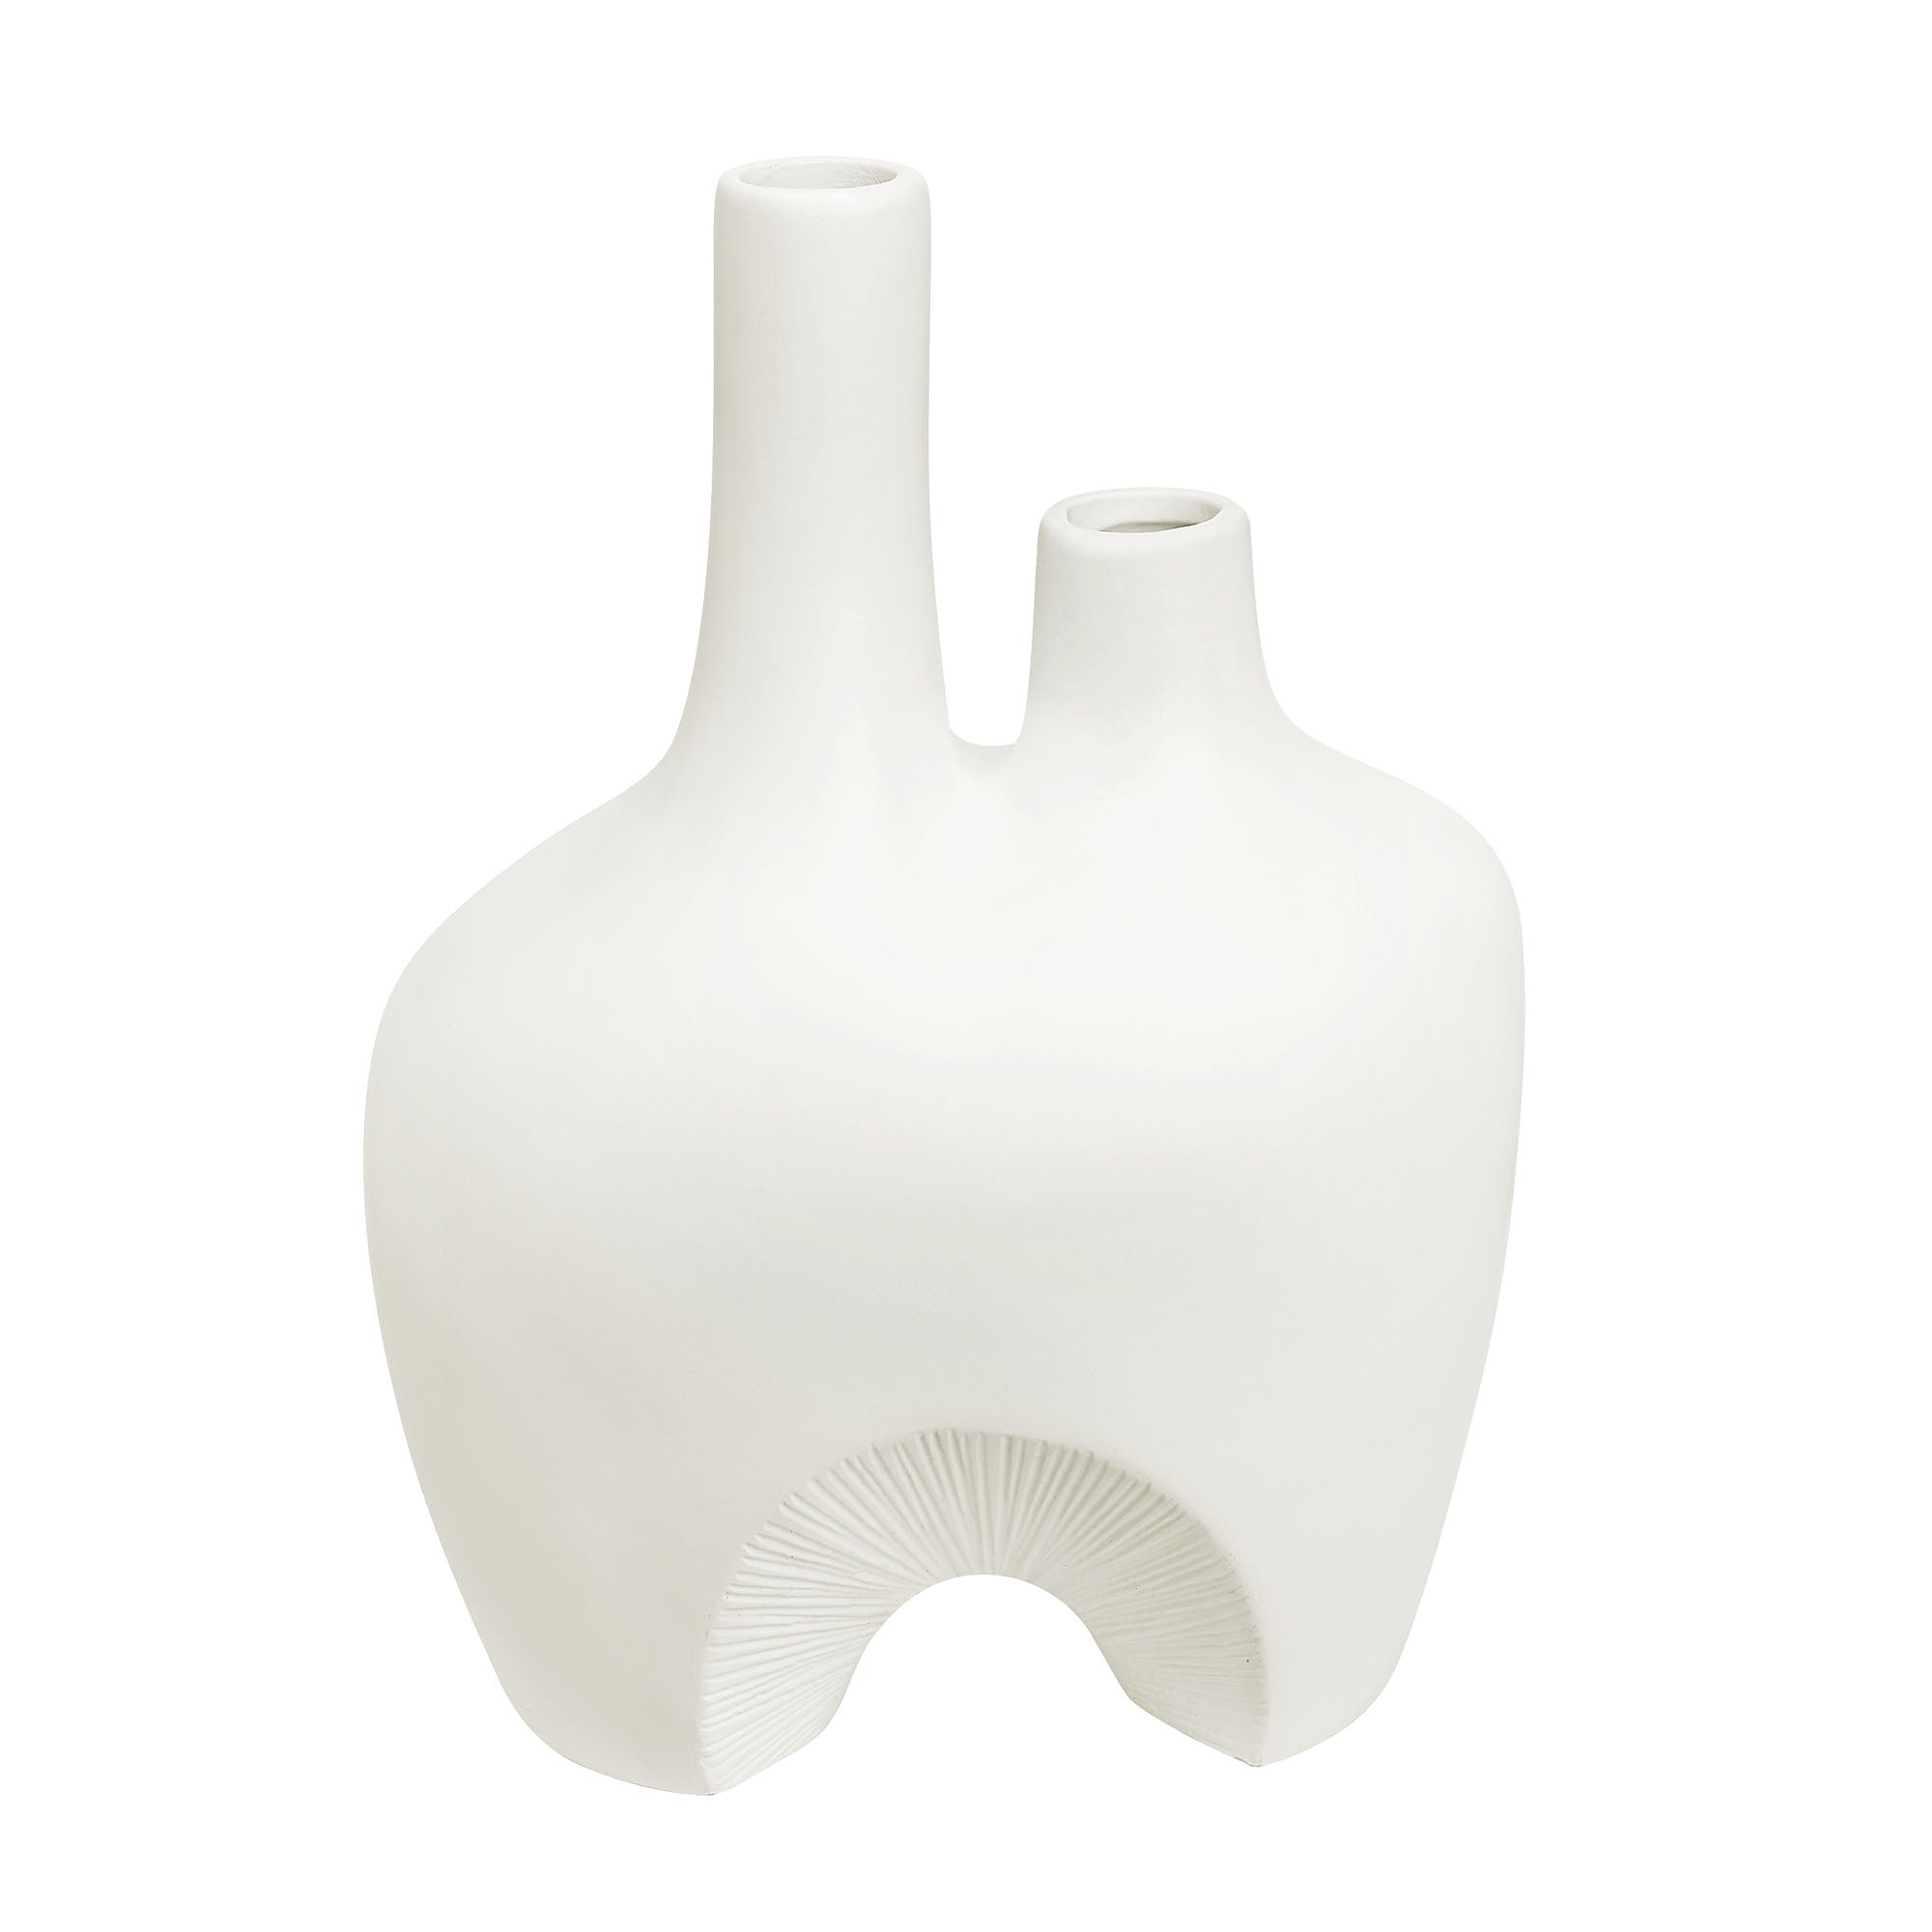 PIONEER Decorative accessory White - VAS209 | RENWIL